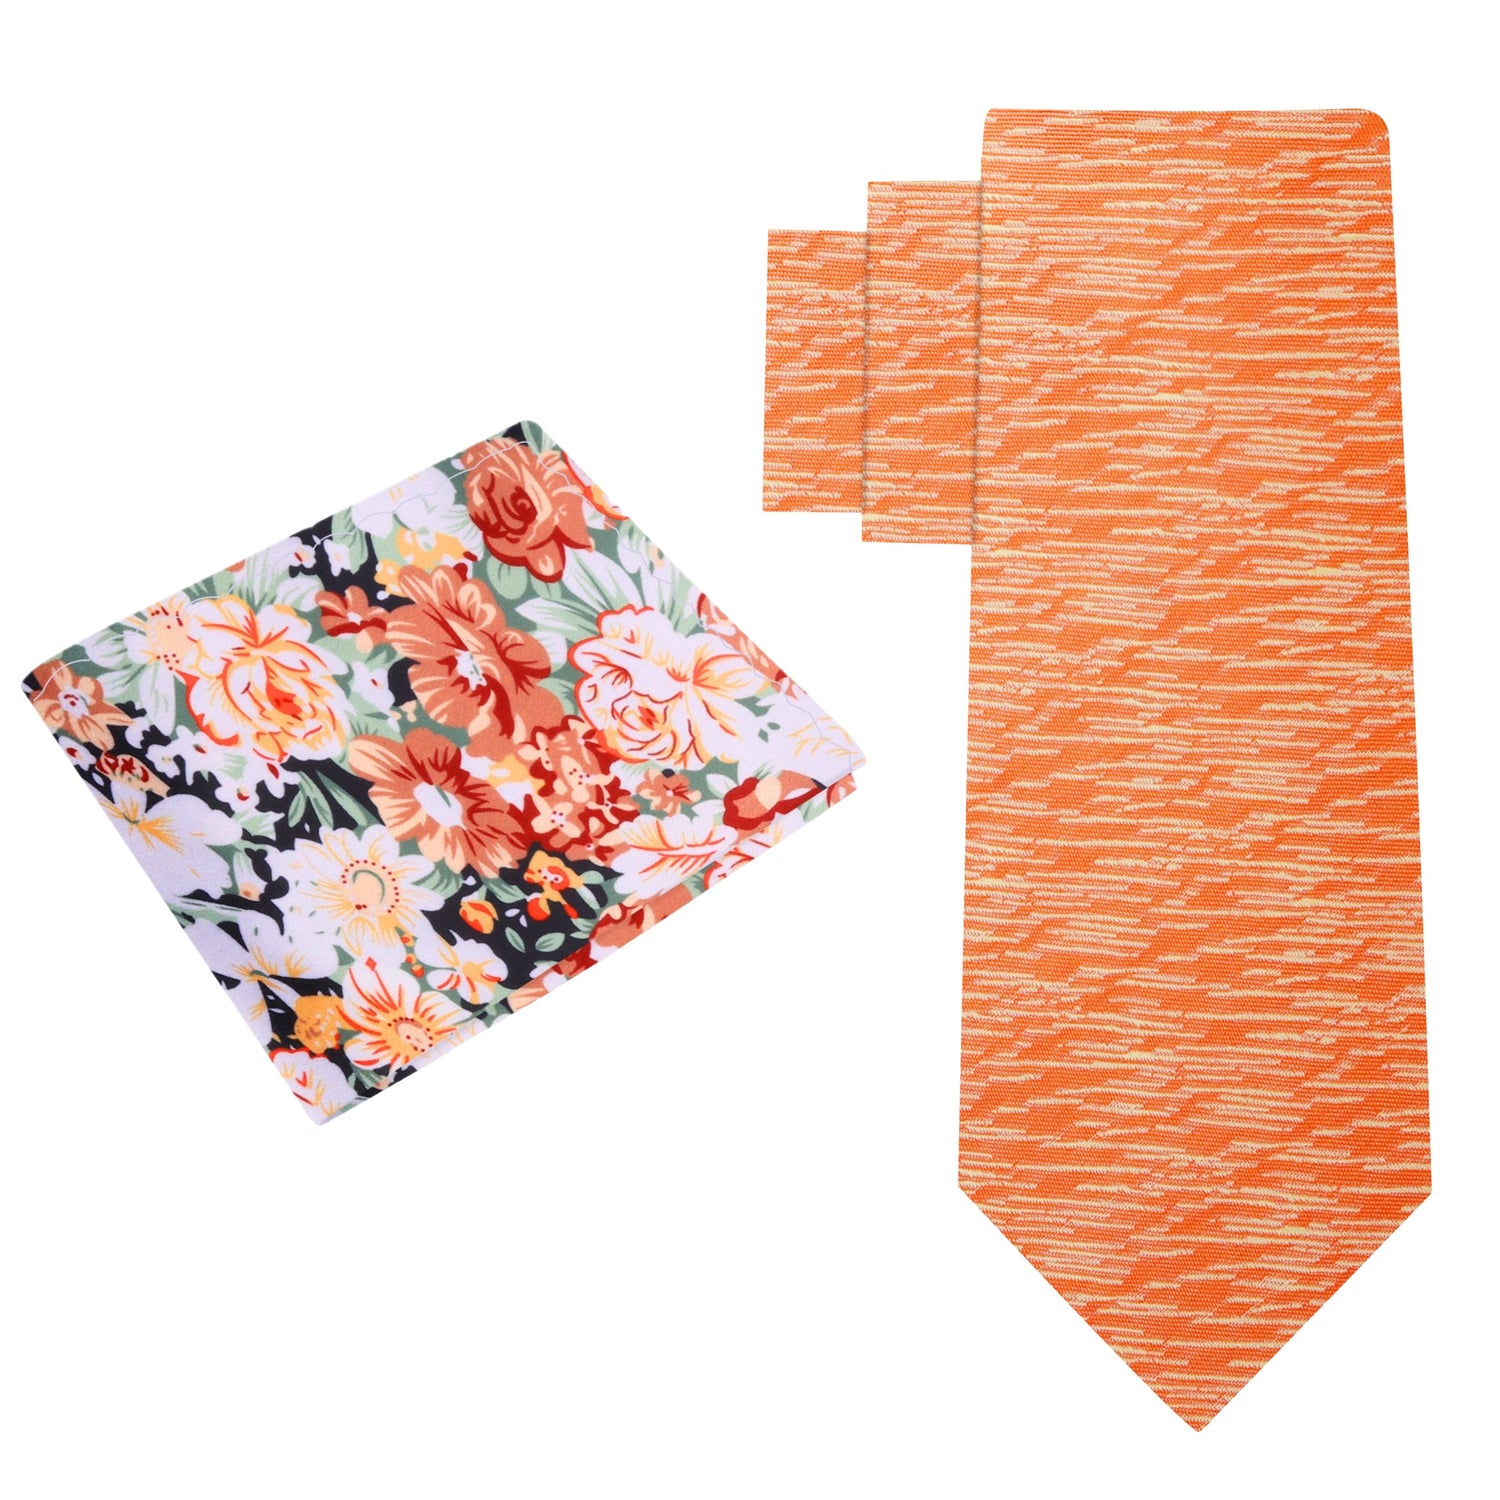 Alt View: Orange Necktie with Orange Floral Square